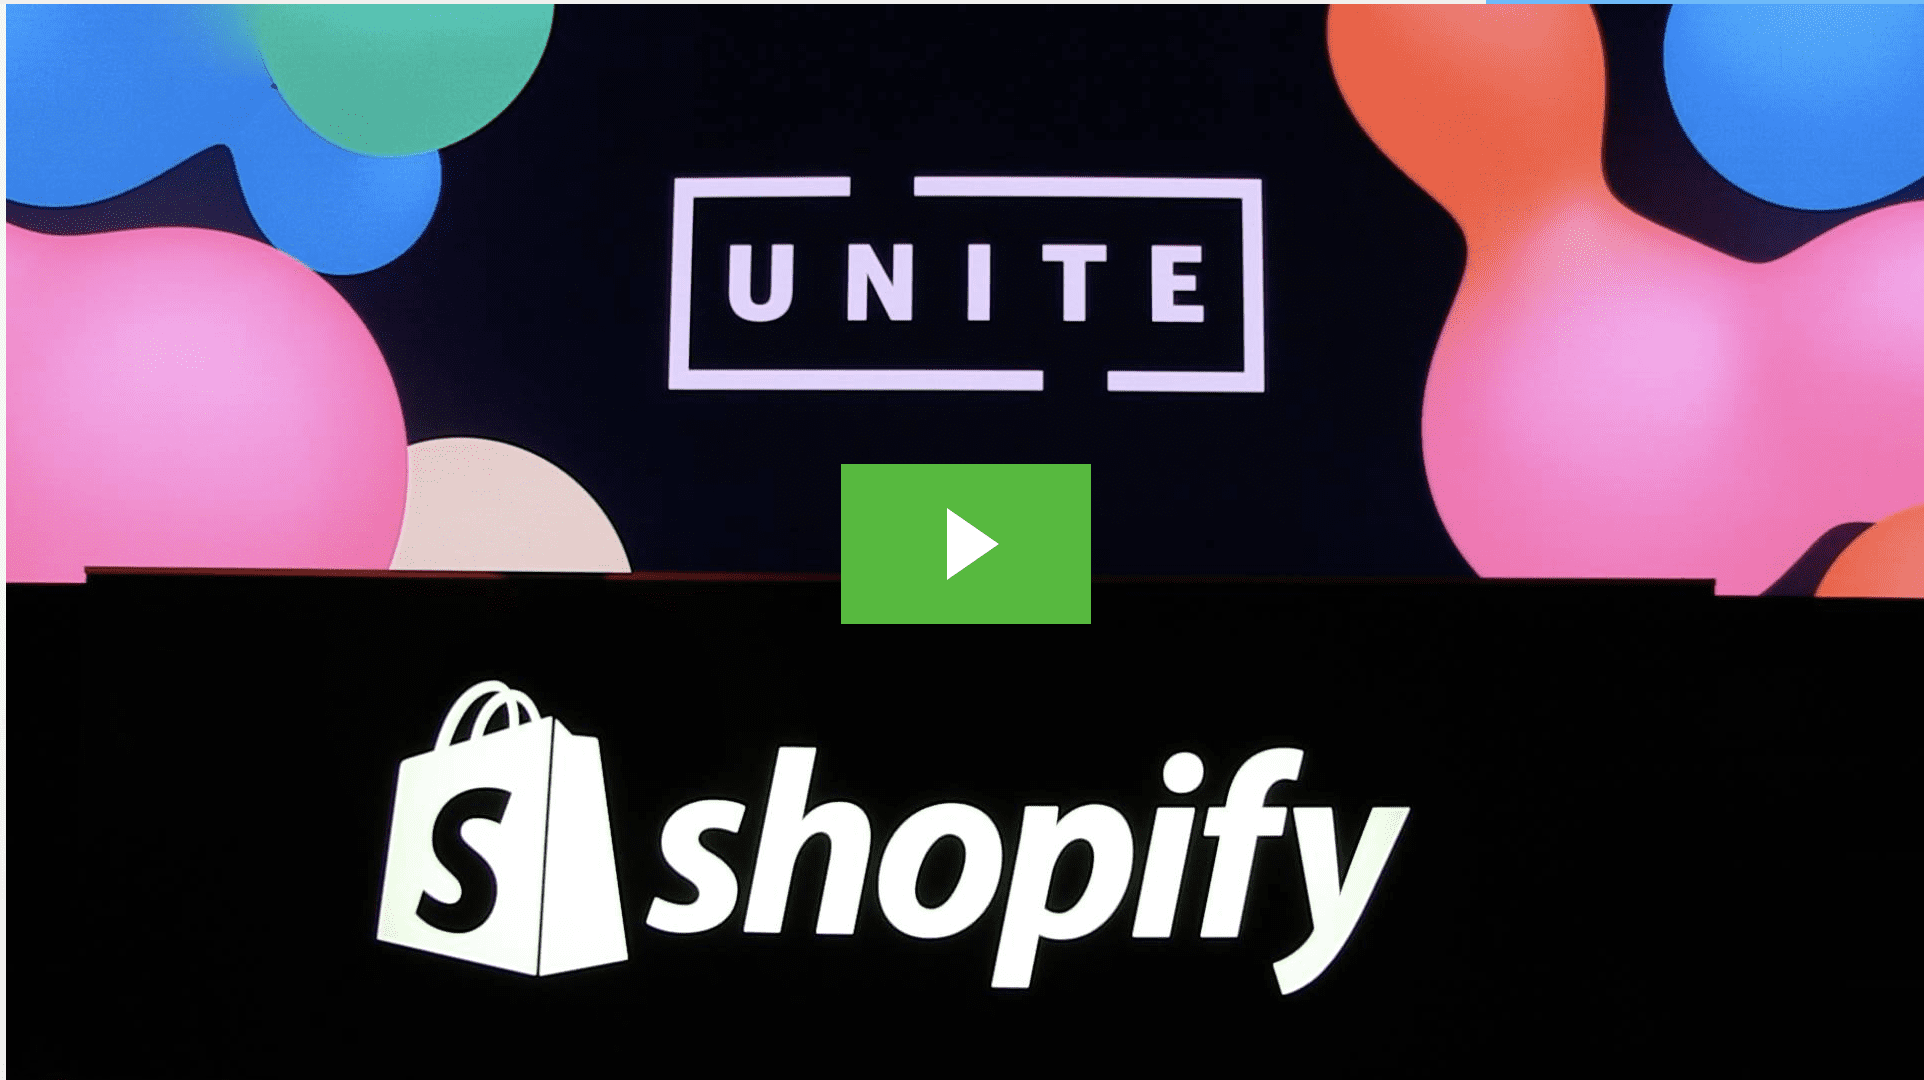 Unite shopify